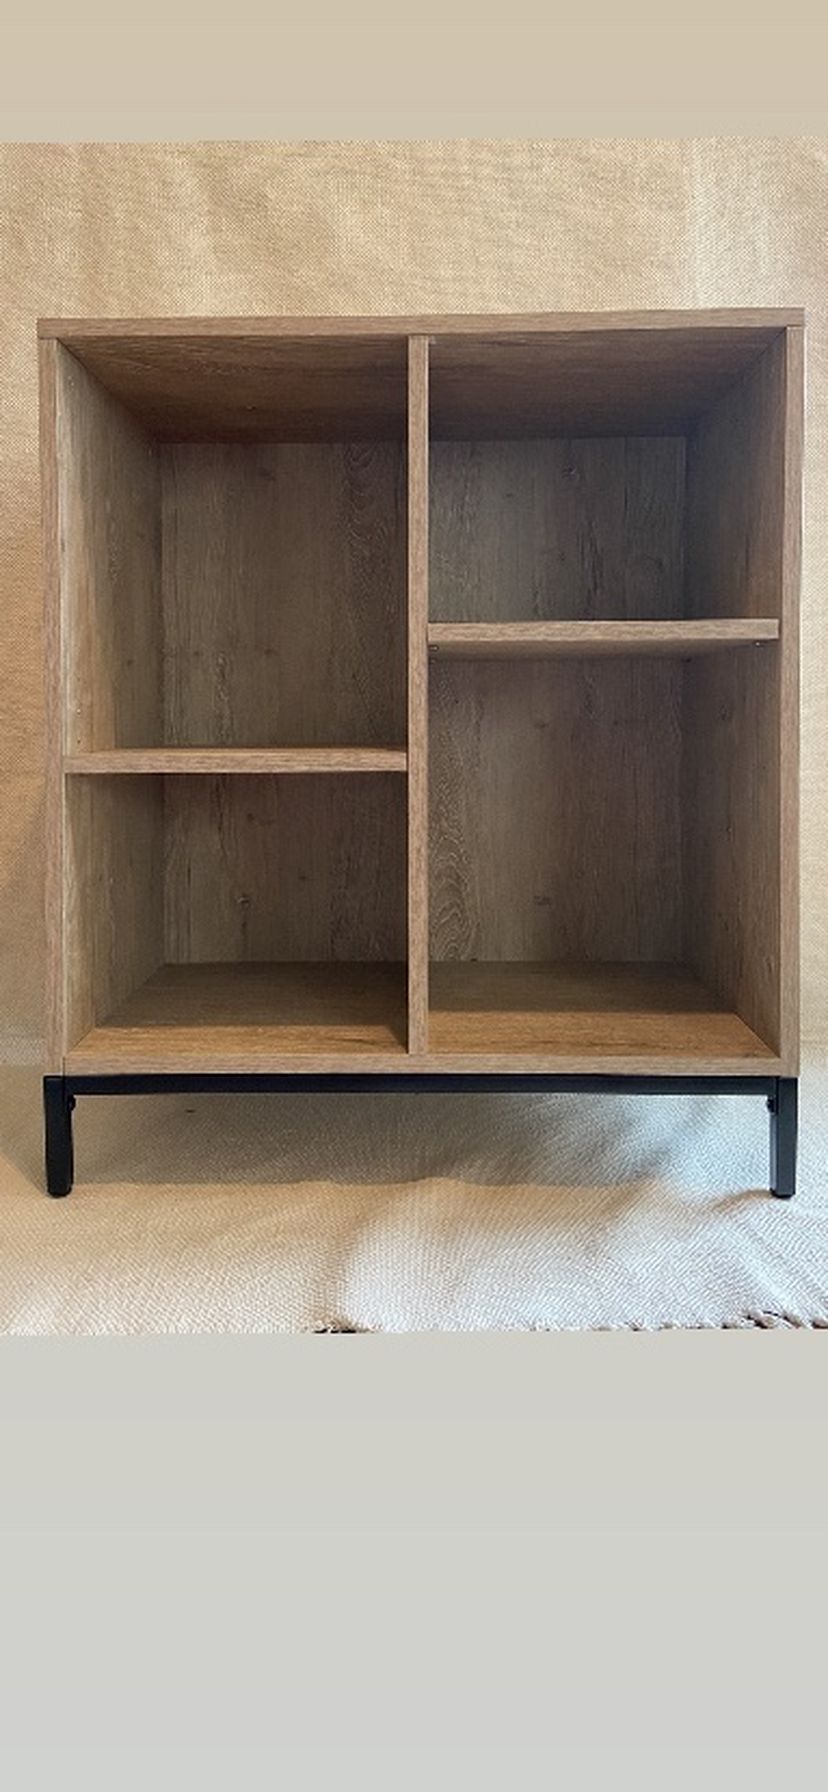 Shelf With Adjustable Shelves (Like New)